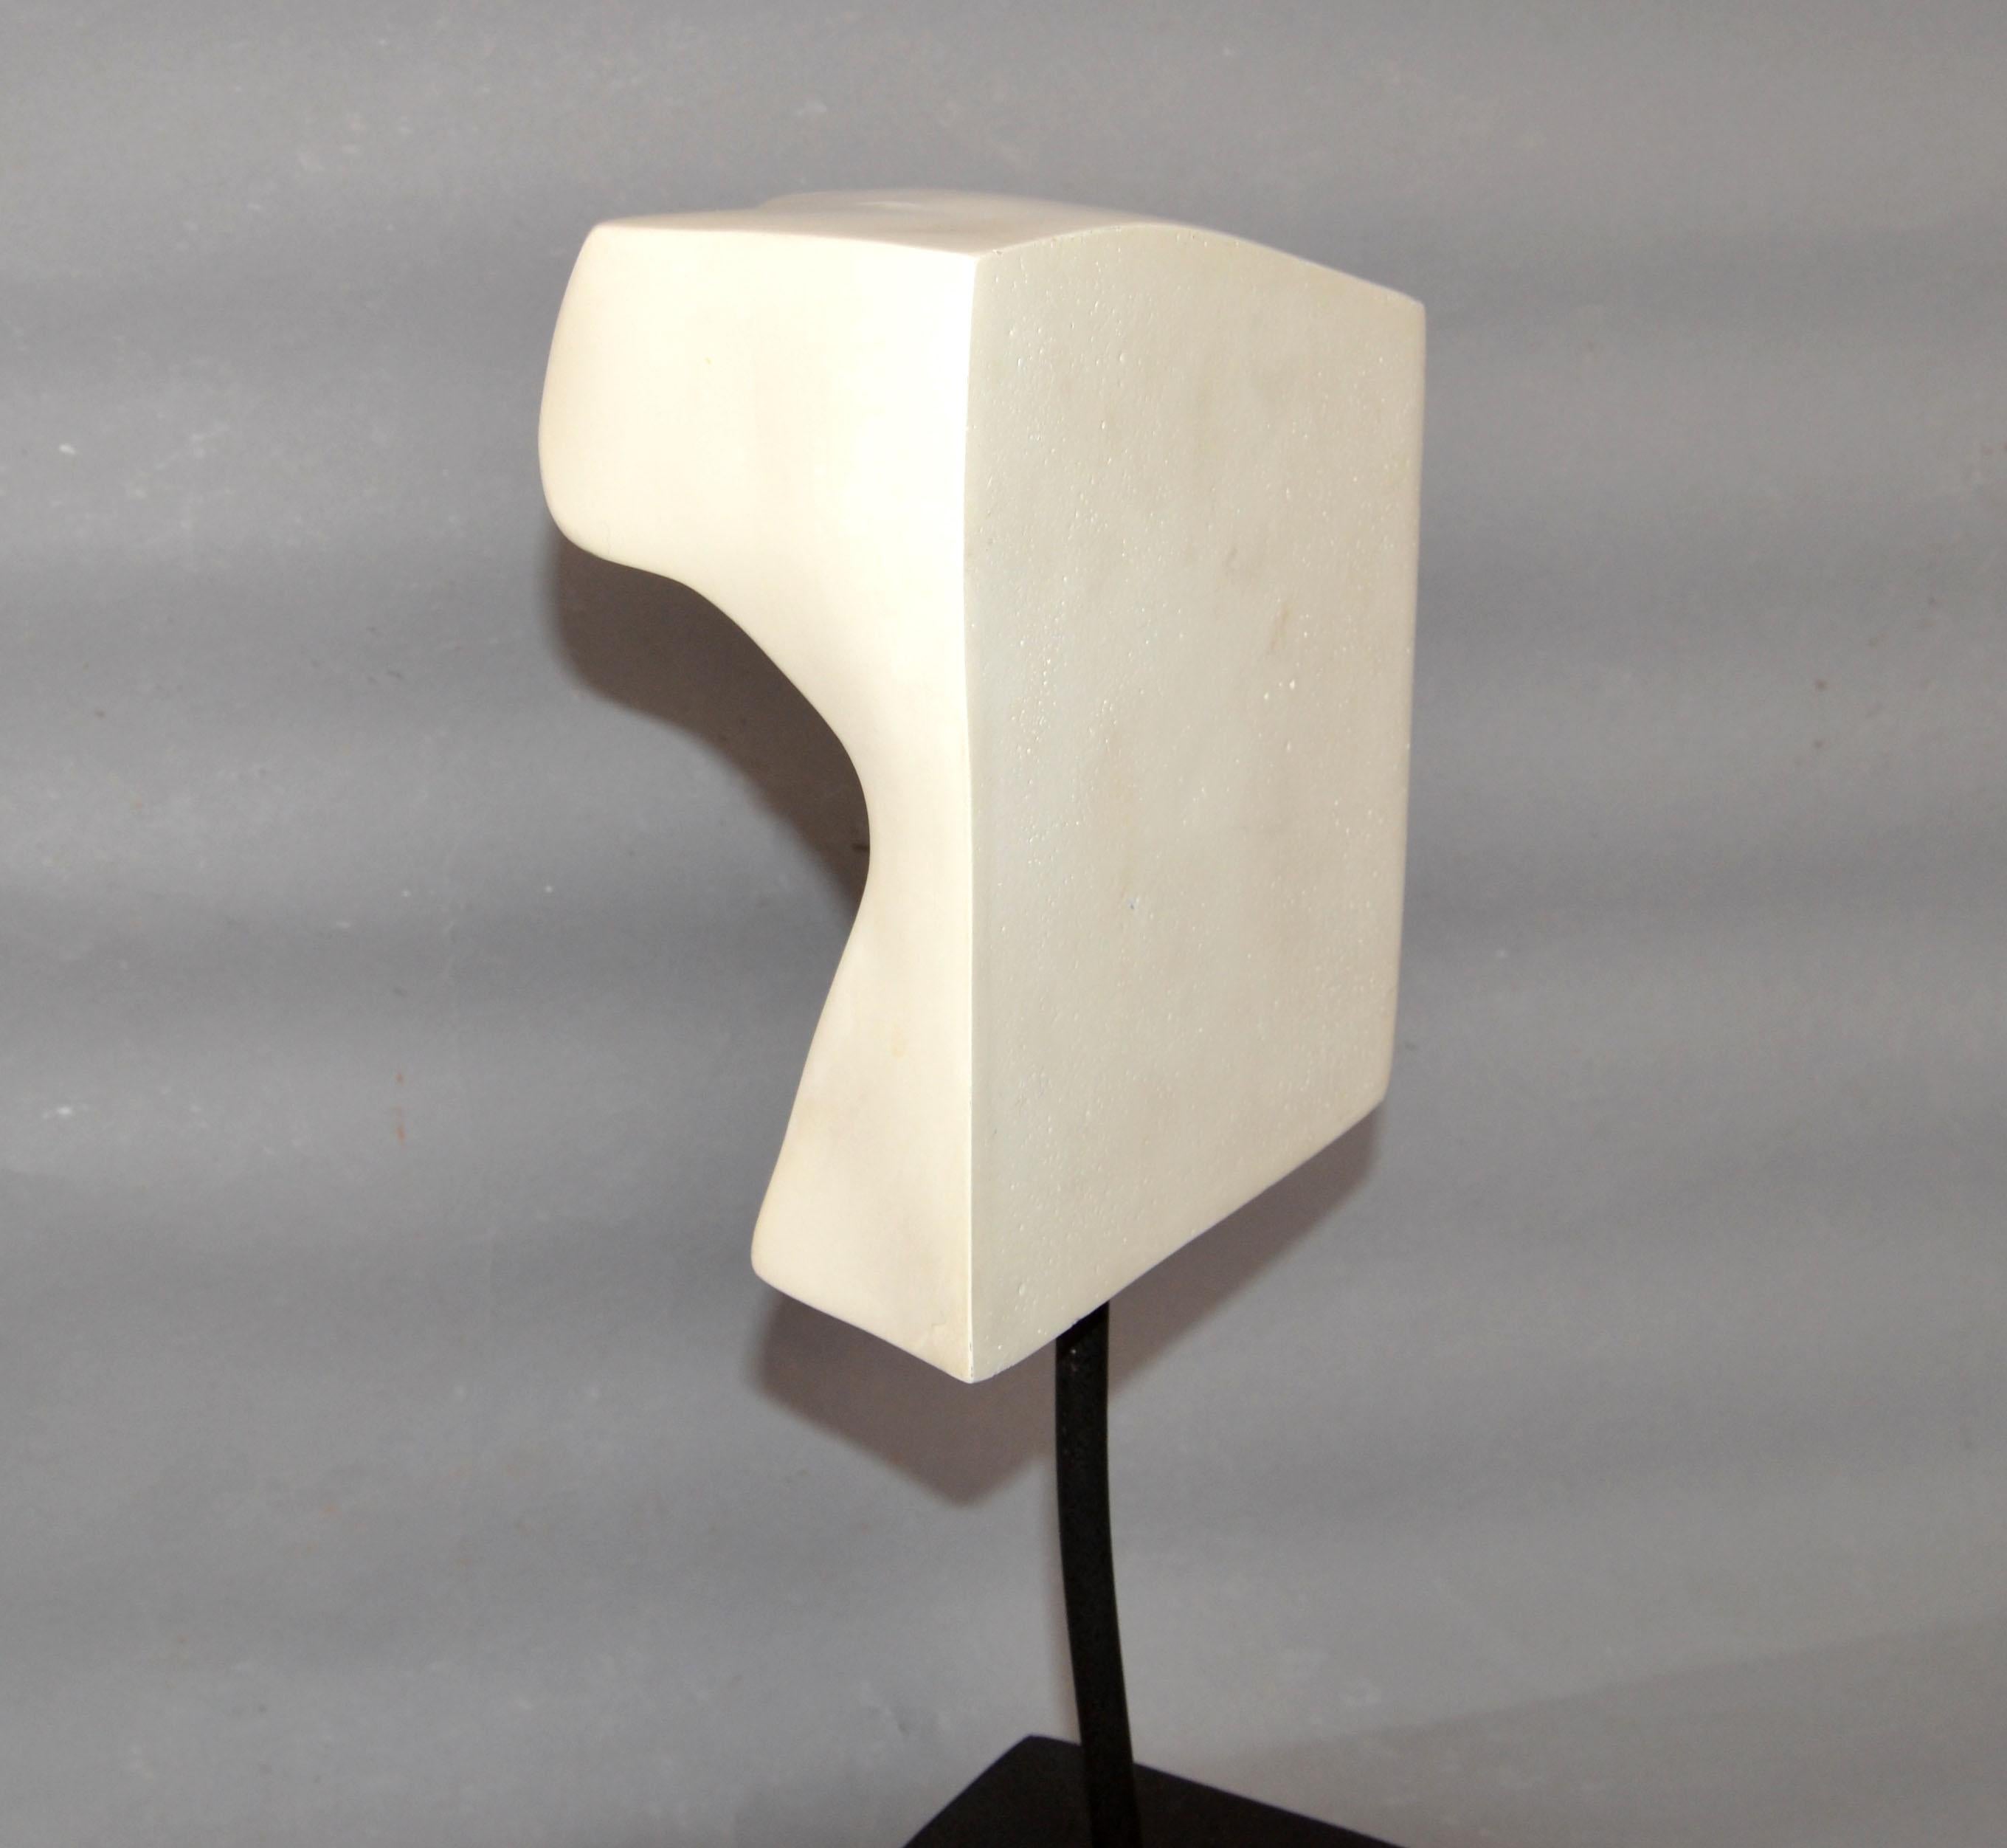 Missing Eye of David Black & White Sculpture Plaster on Wood Mid-Century Modern For Sale 2